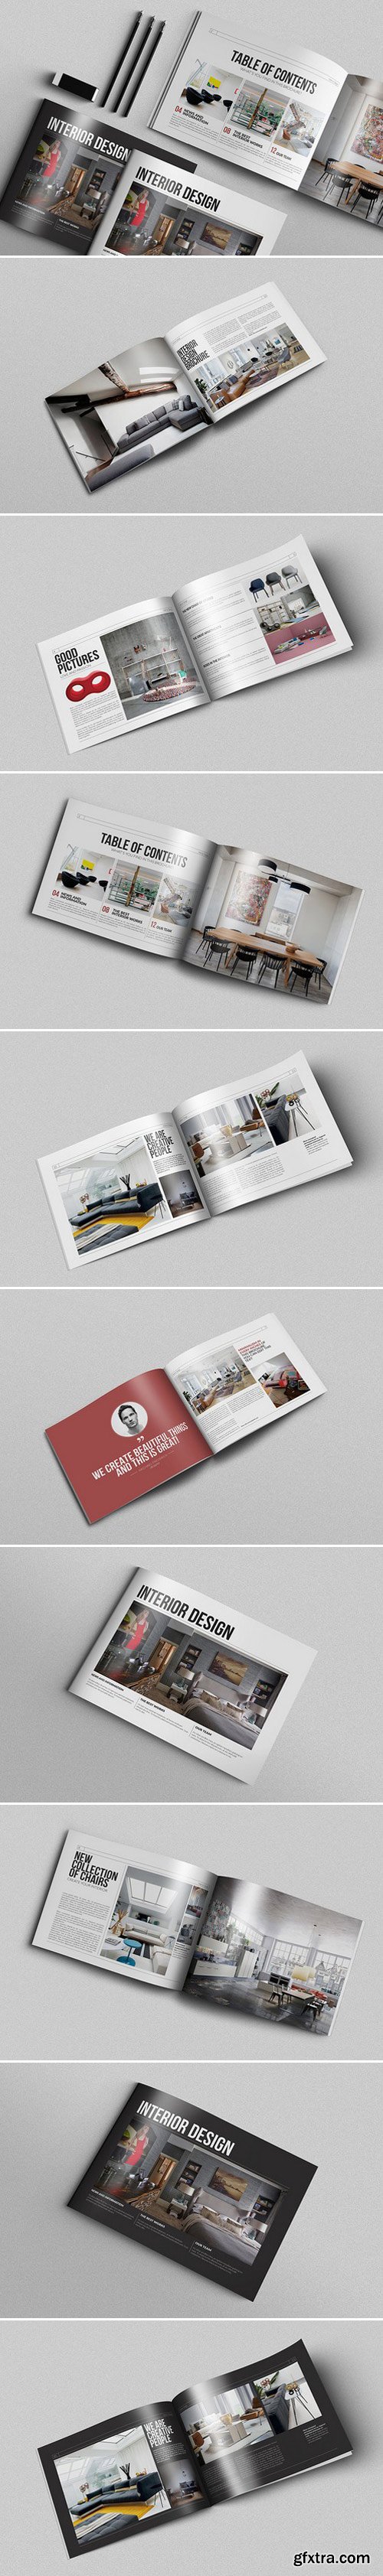 CM - Interior Design Brochure 438269